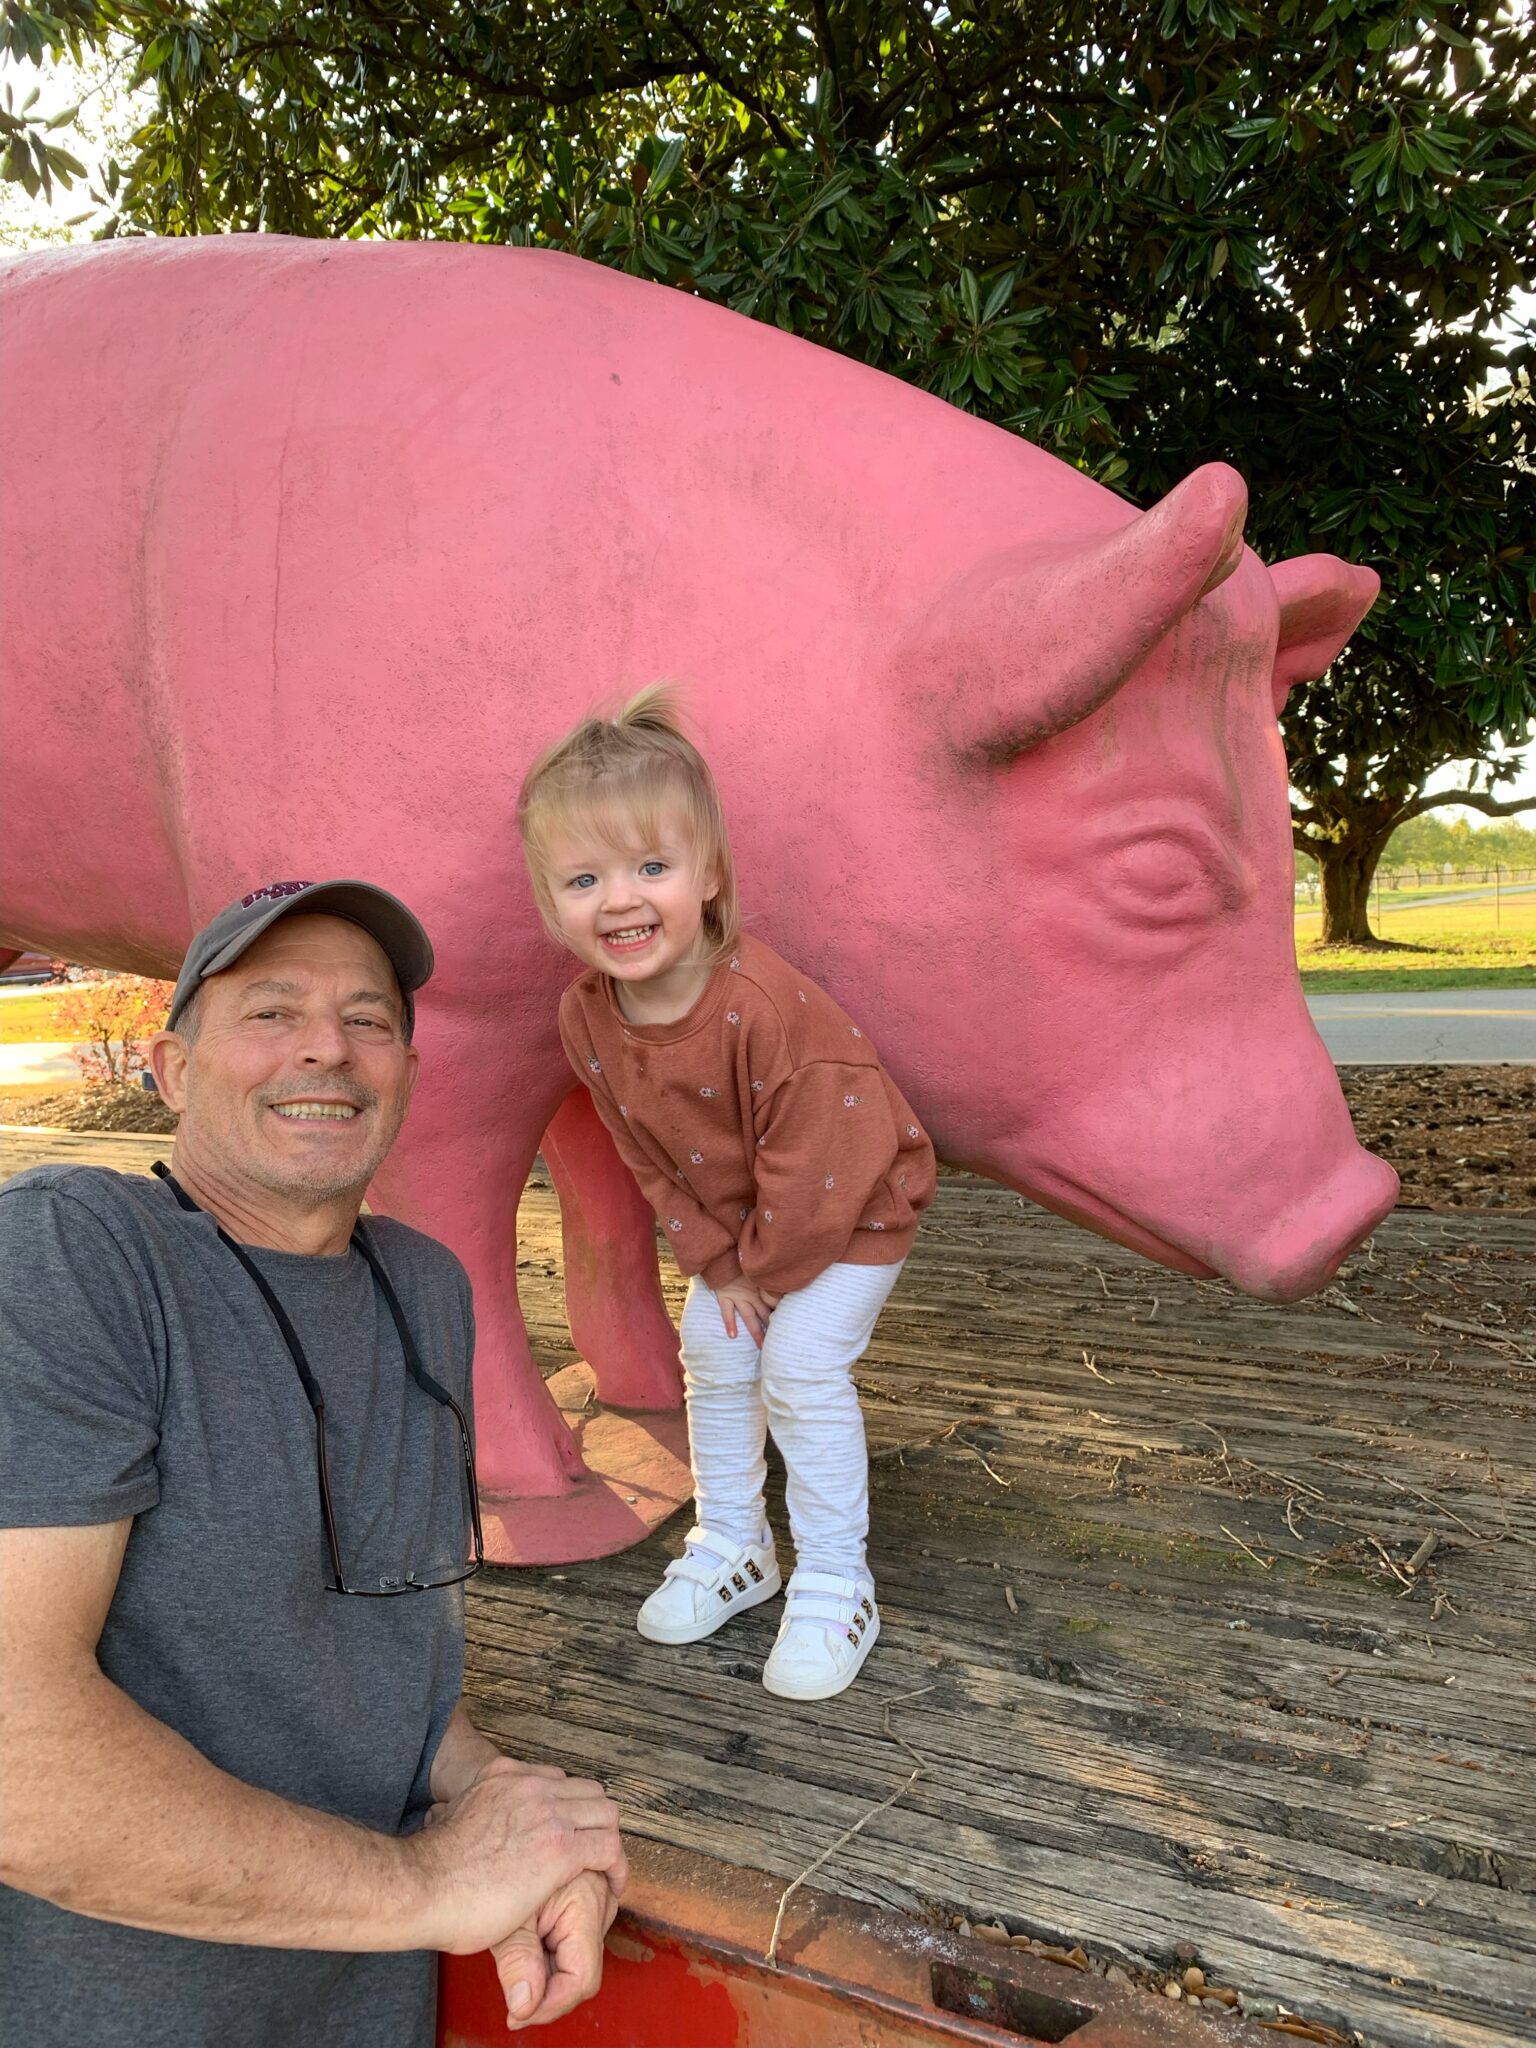 Home Repairs volunteer Joe Redmond with granddaughter in front of large pig statue